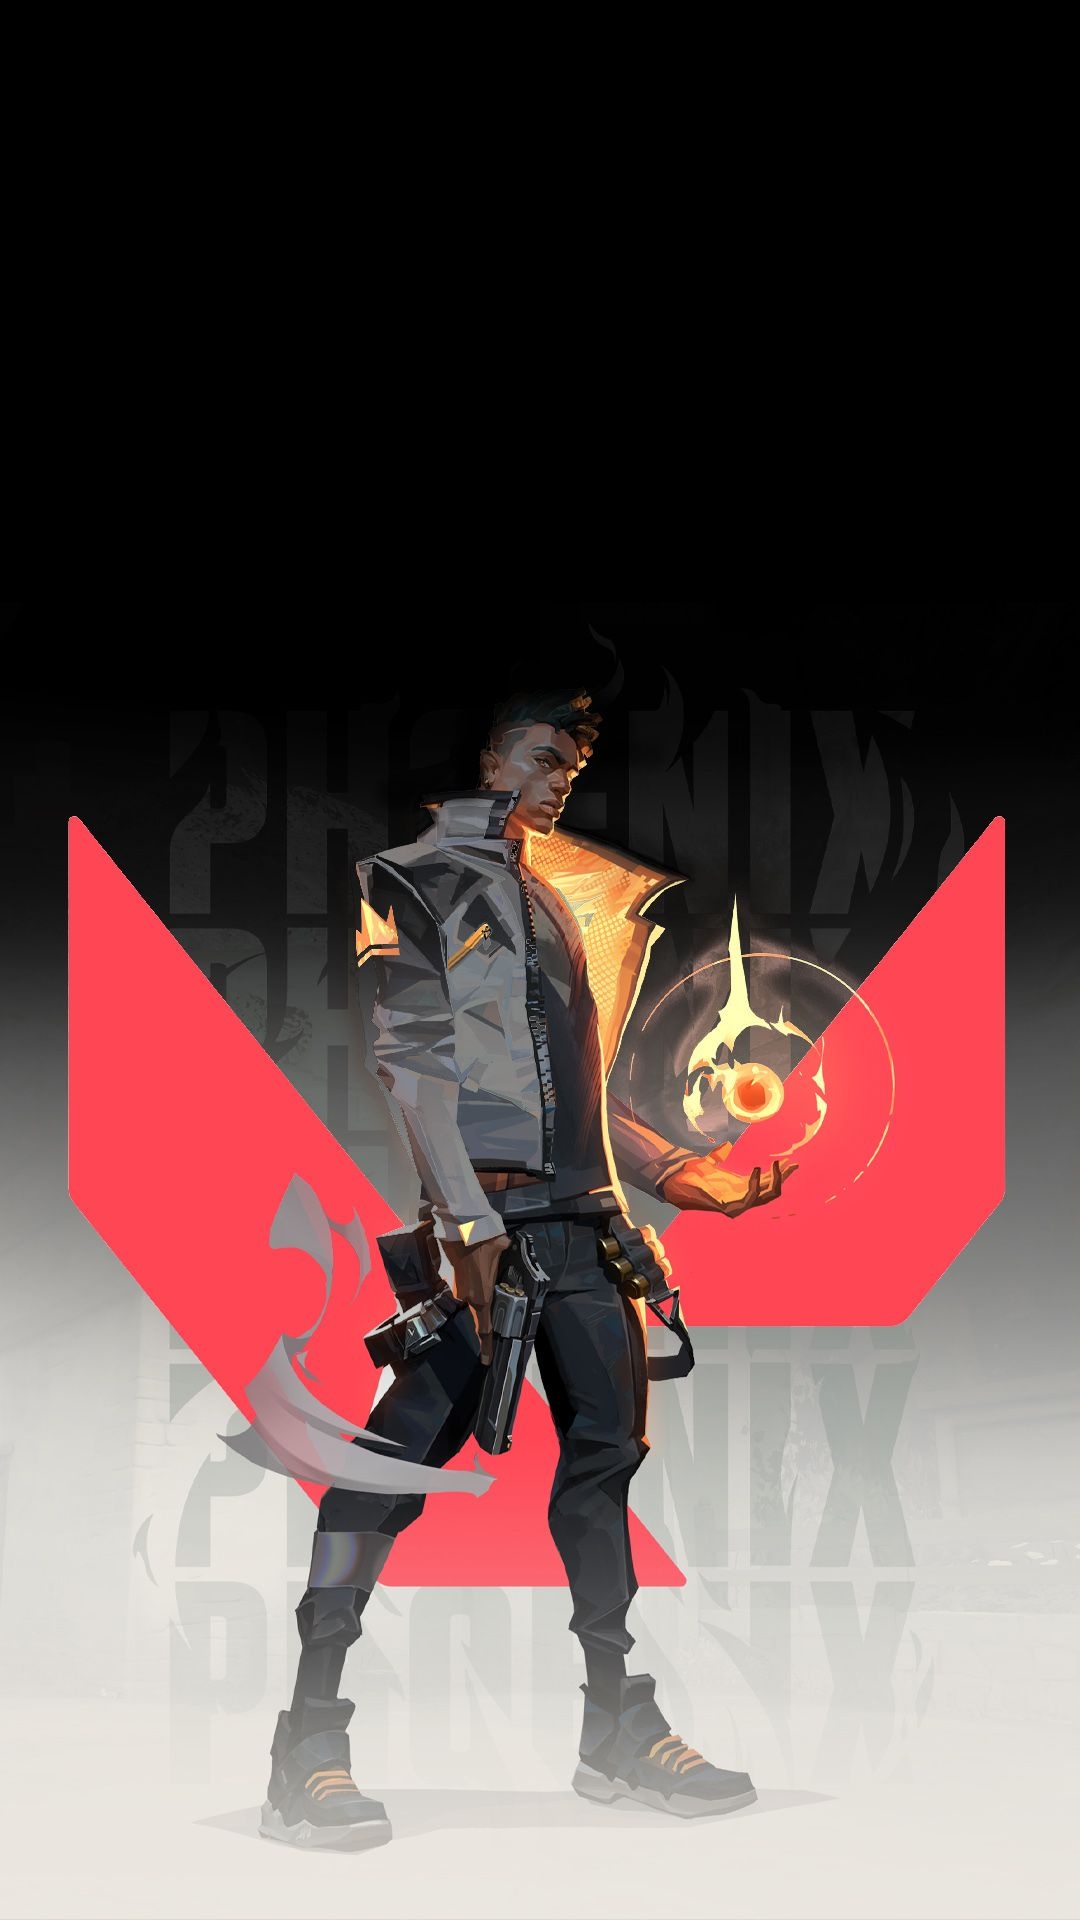 Phoenix character art, Valorant mobile wallpaper, Overwatch hero crossover, Mobile gaming, 1080x1920 Full HD Handy